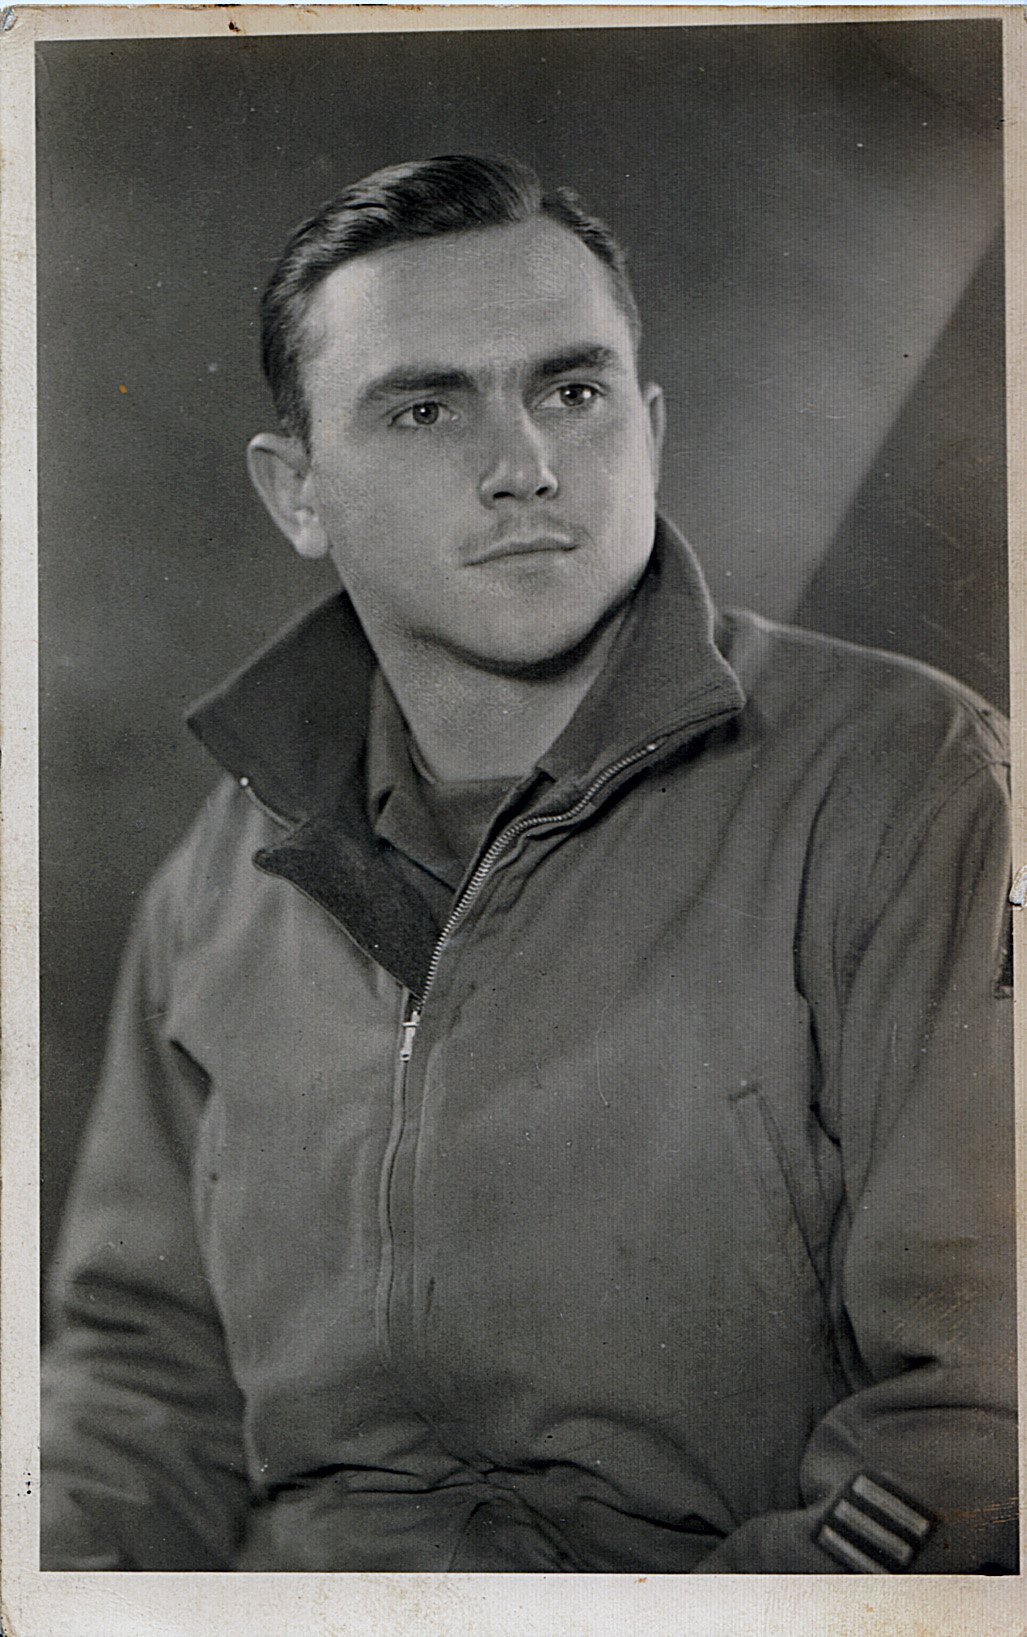 David Edd Hiett, “Tex” of C Company, 17th Armored EngineersBelgium March 1945s Mark Hiett FB